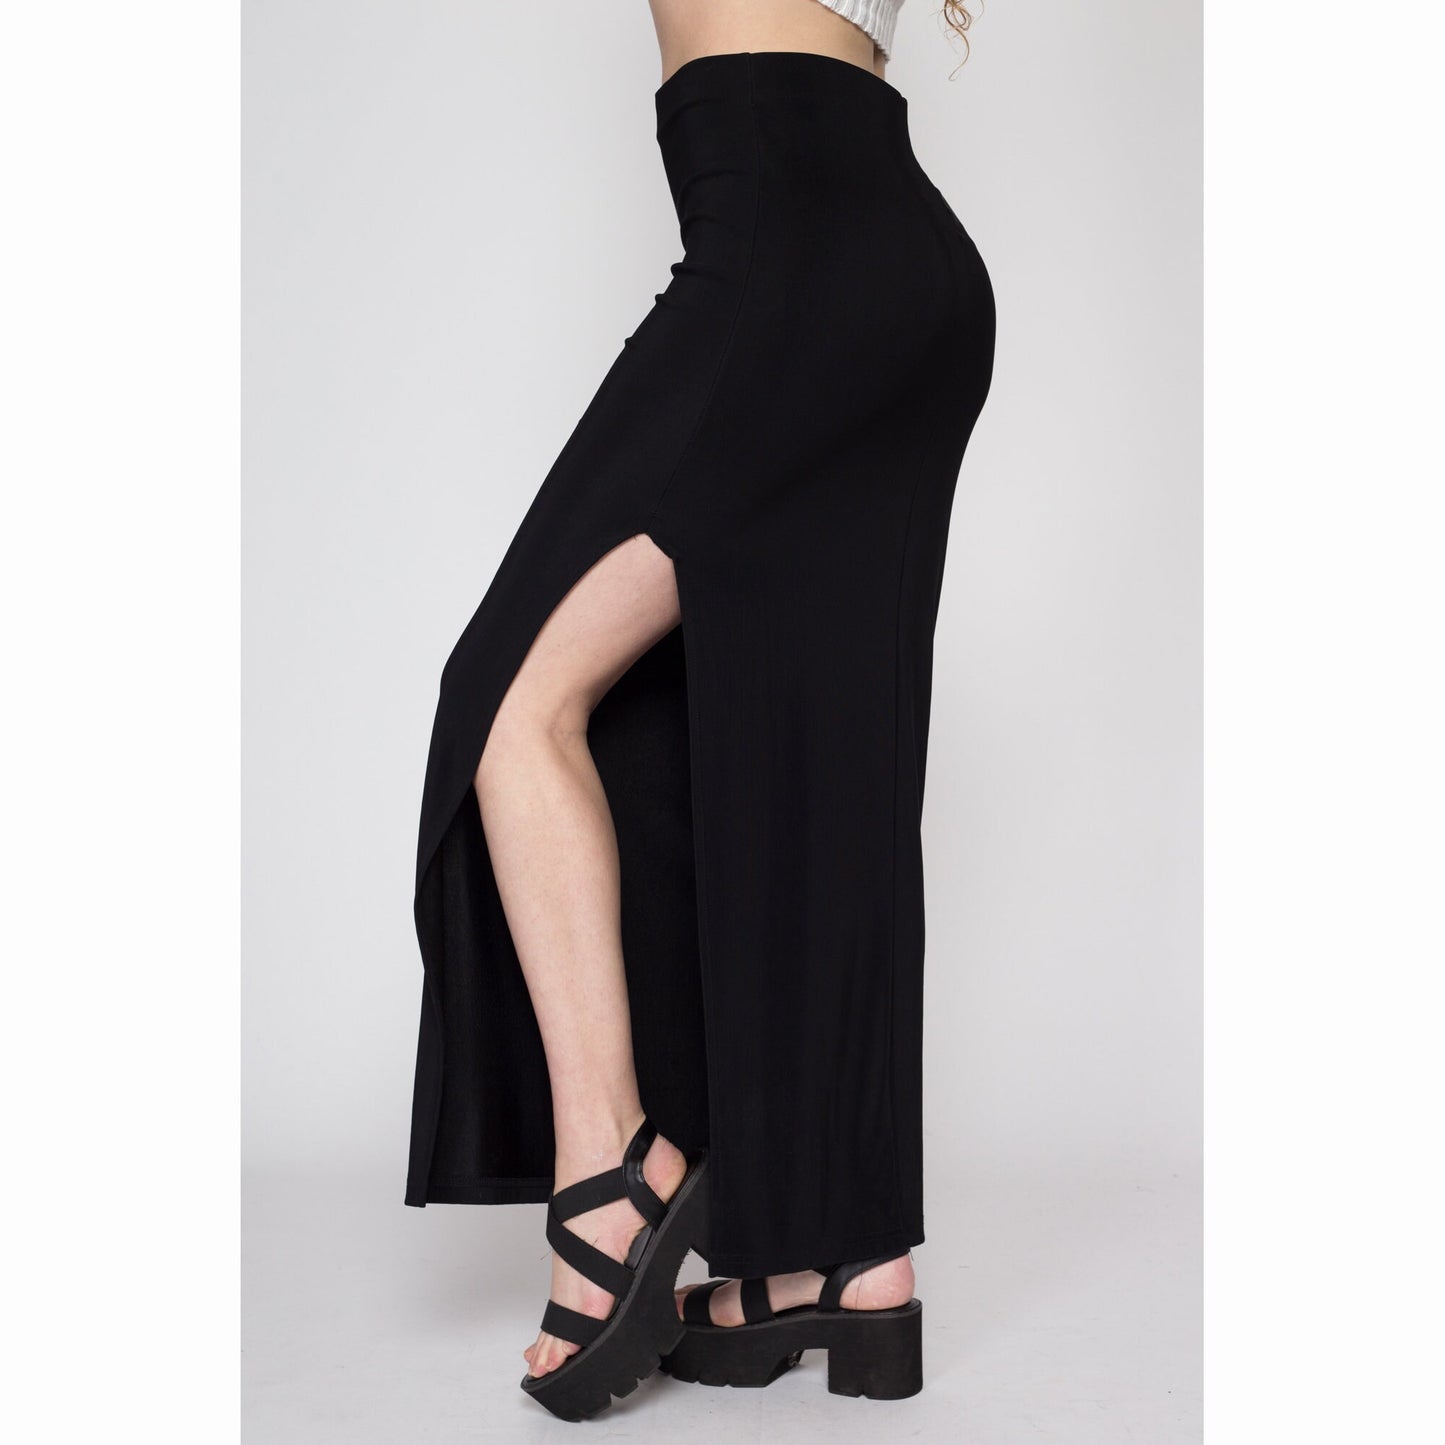 Medium 90s Slinky Black High Slit Maxi Skirt | Vintage Minimalist Fitted High Waisted Skirt